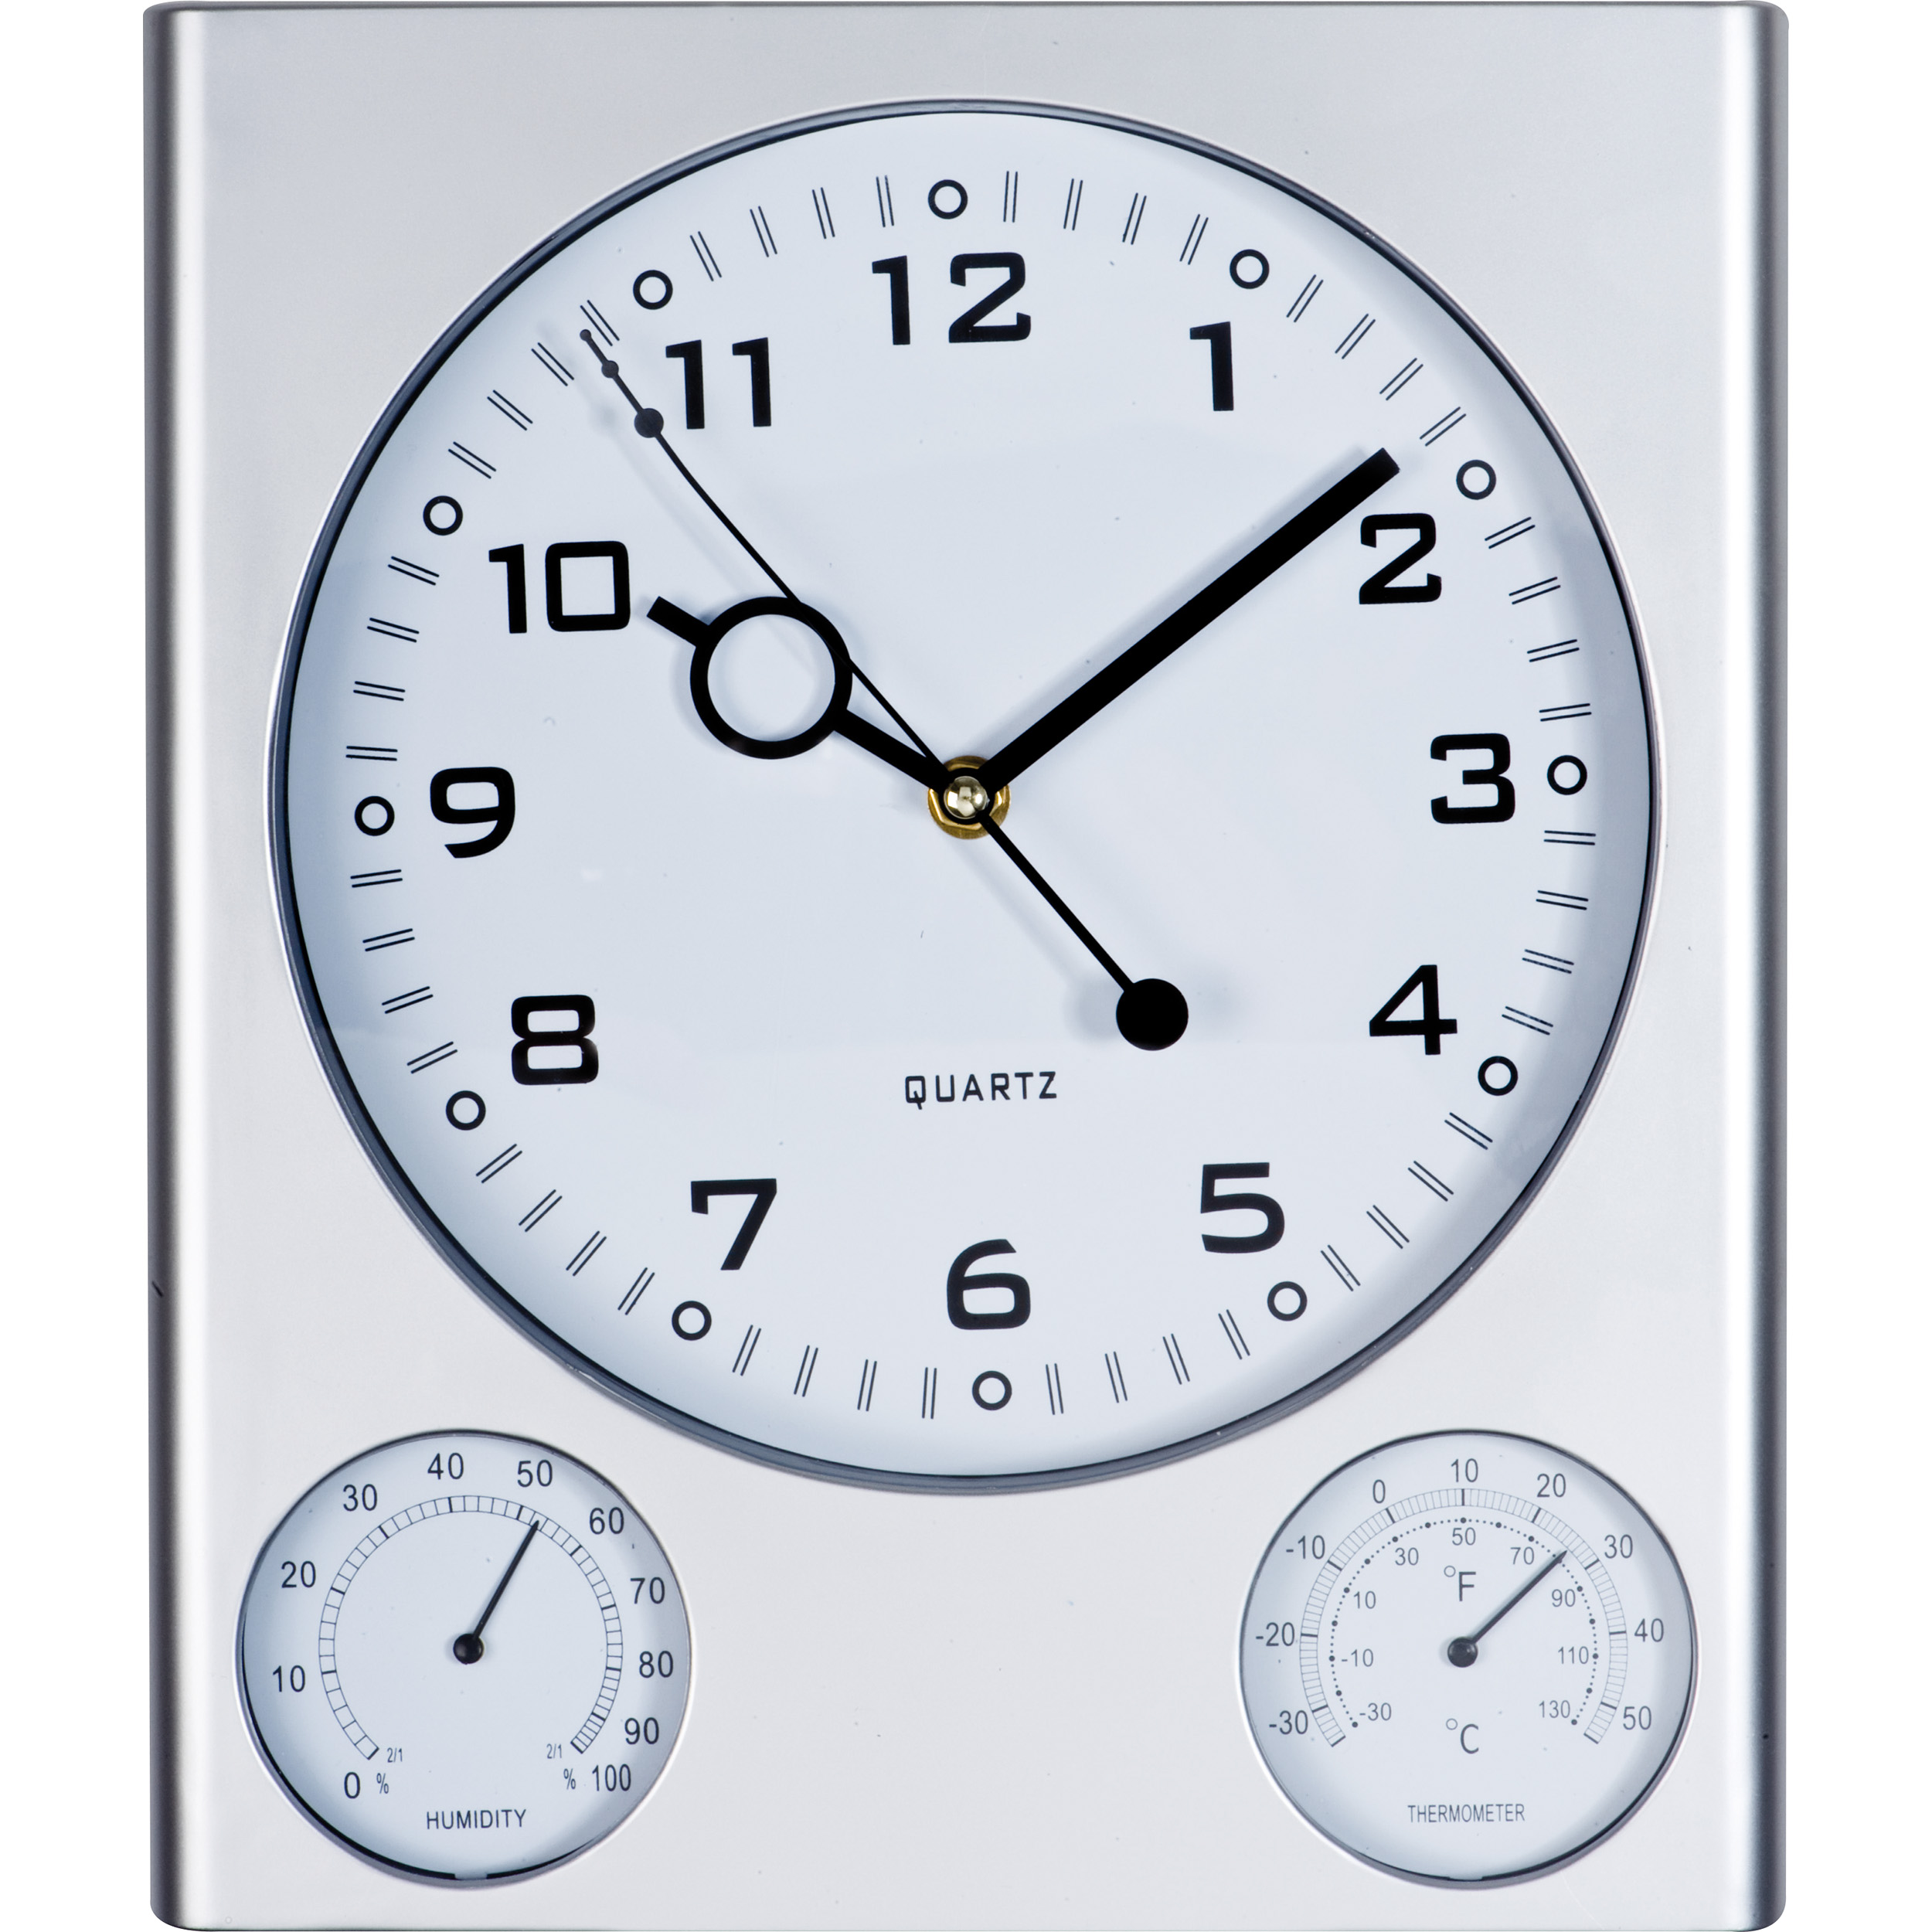 Hygrometer-Thermometer Clock - Ashurst - Pluckley